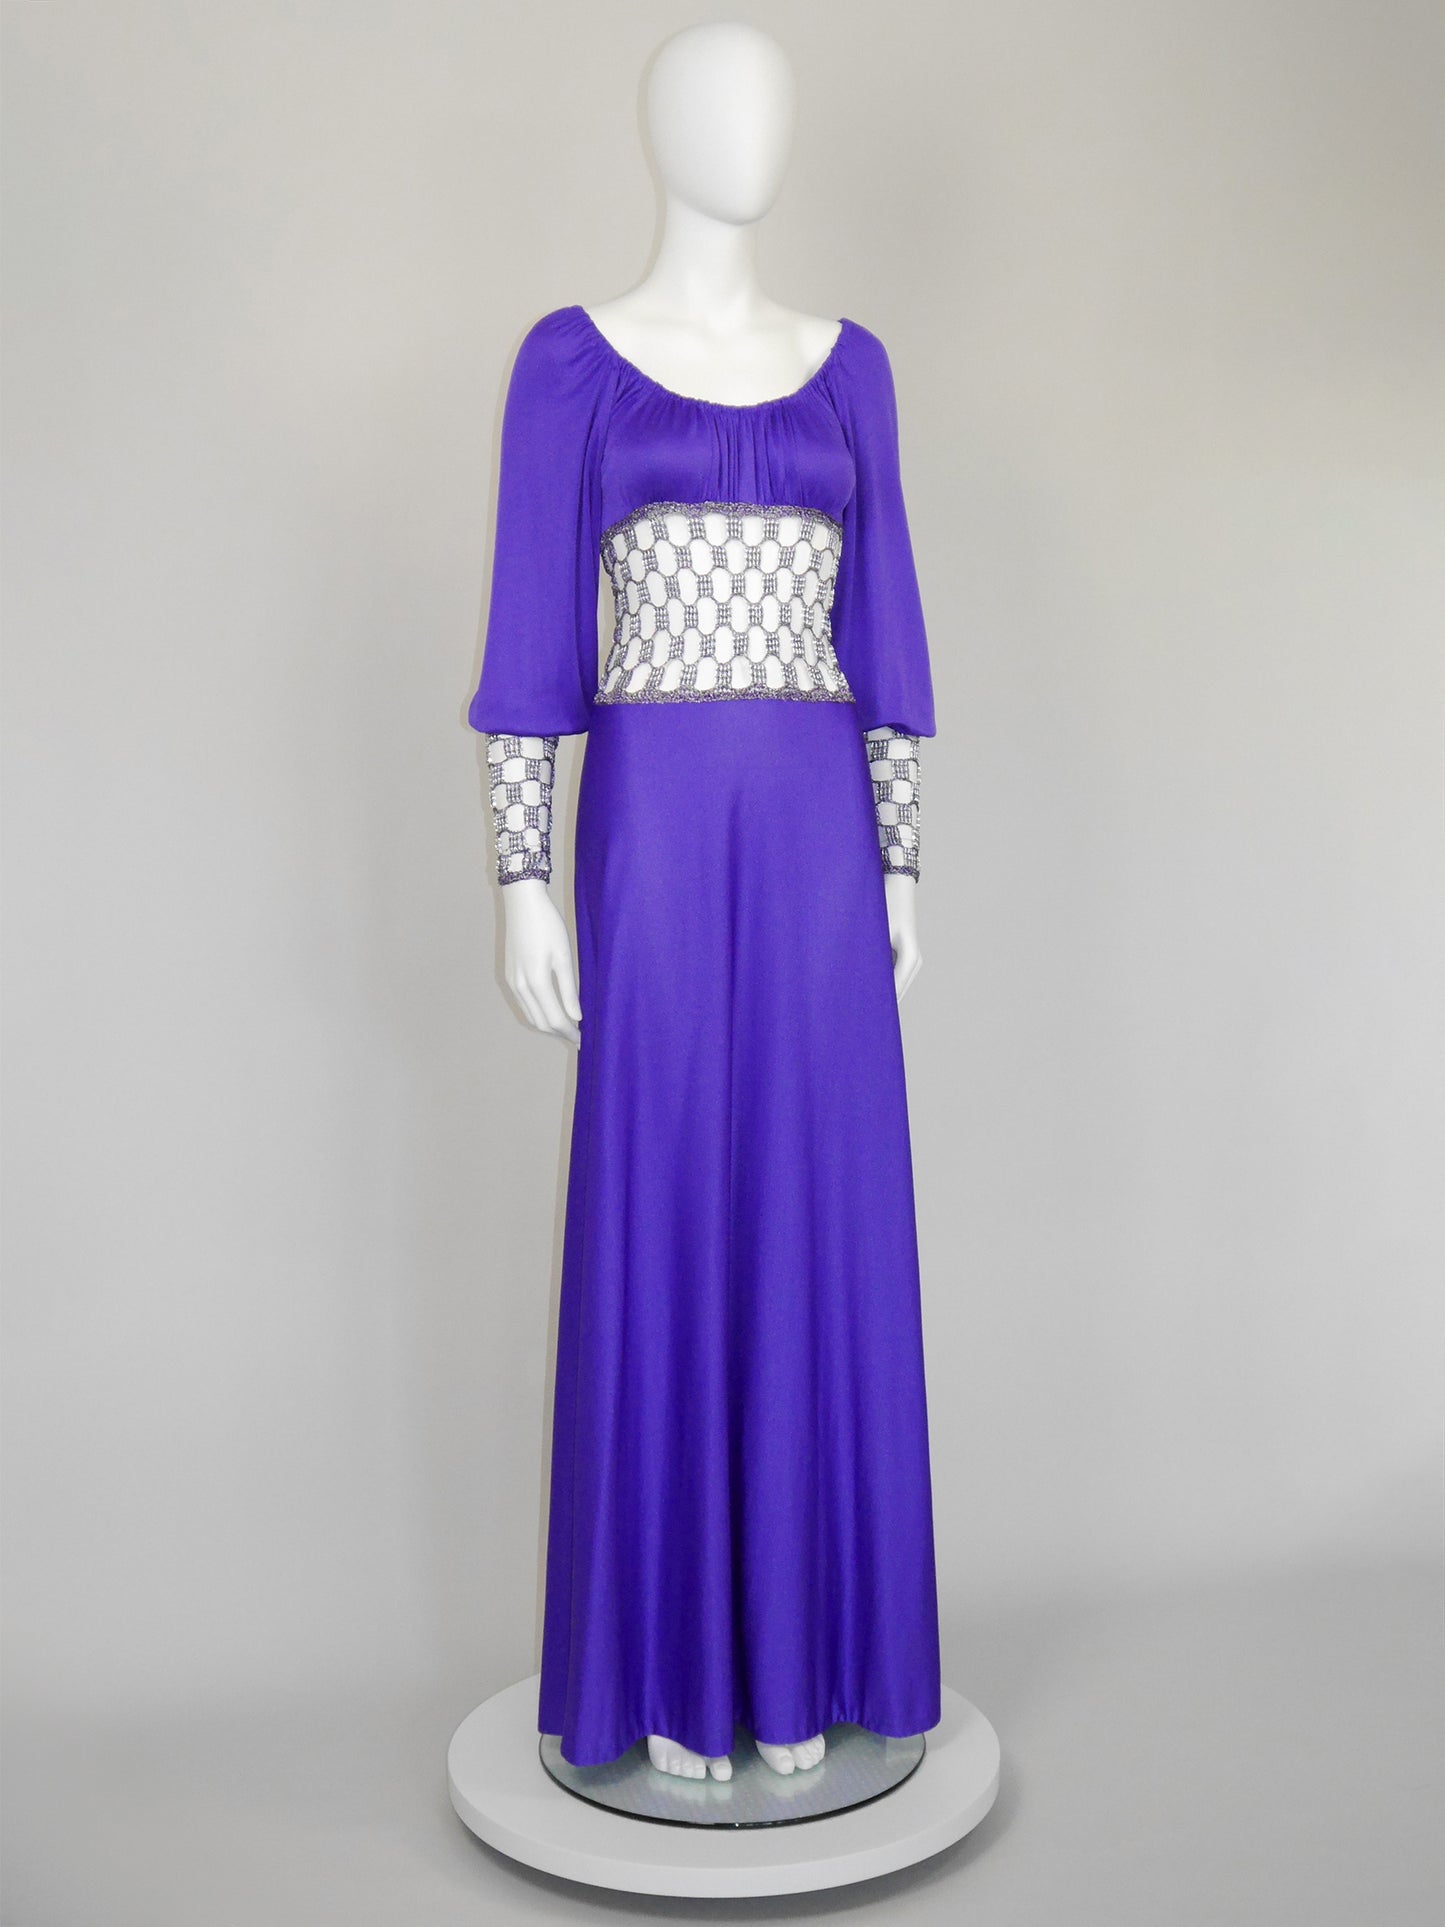 LORIS AZZARO 1970s Vintage Purple Crochet Chainmail Maxi Evening Gown Size S